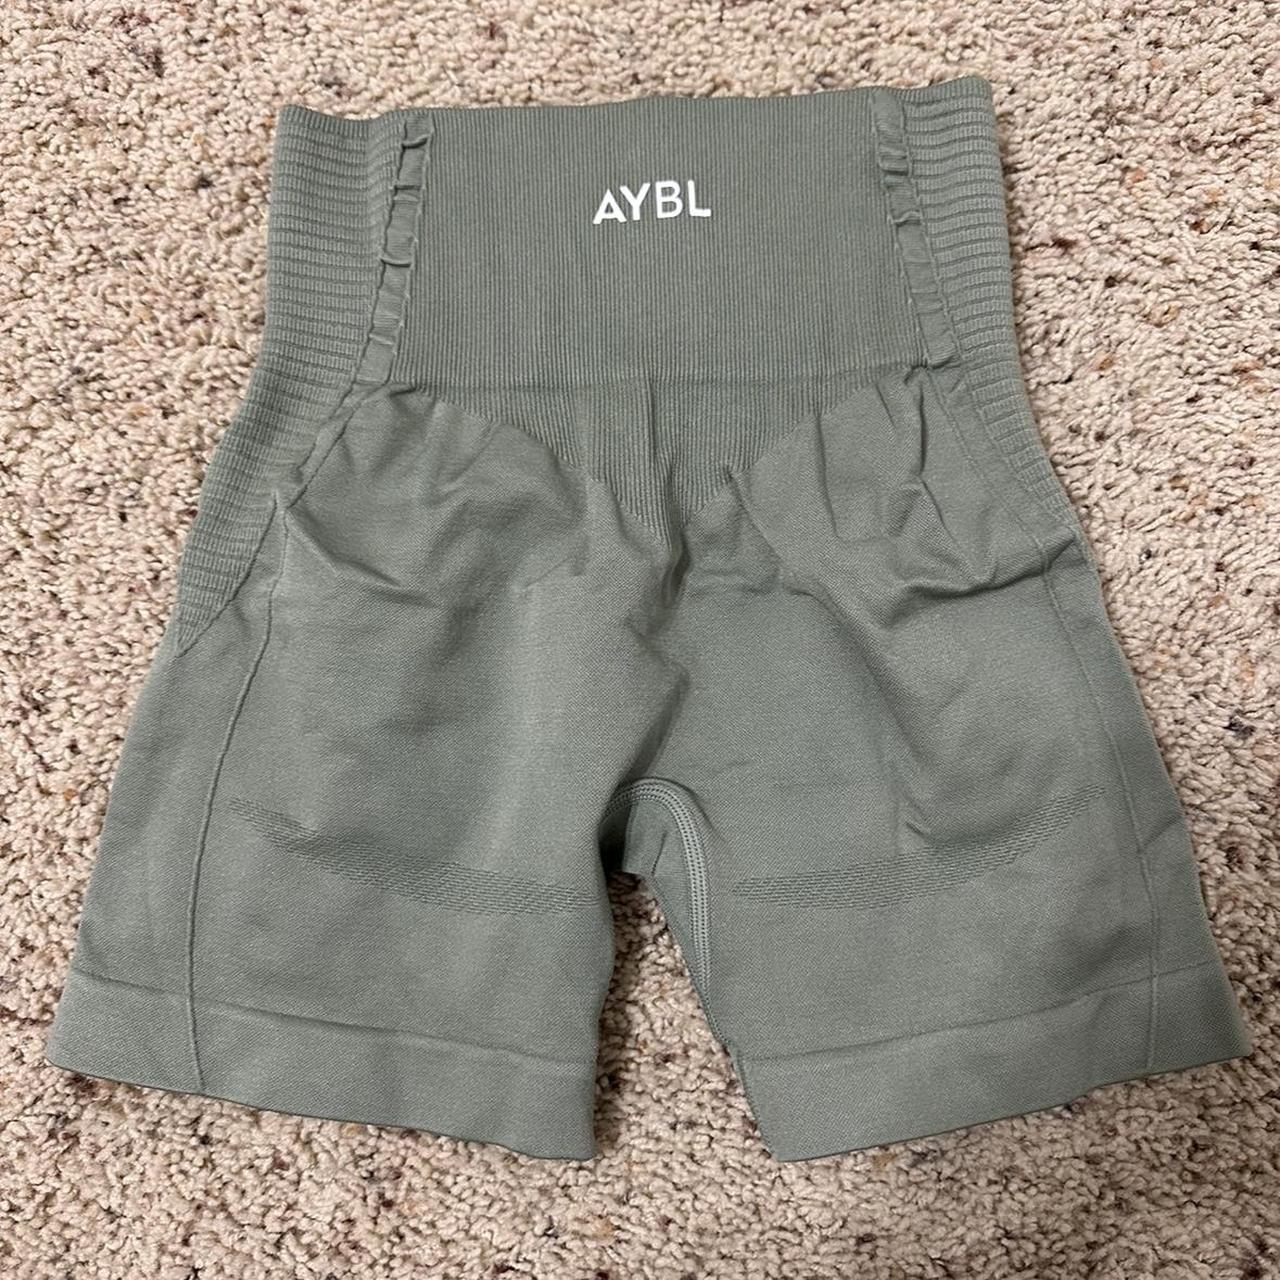 AYBL, Shorts, Olive Green Balance V2 Aybl Shorts